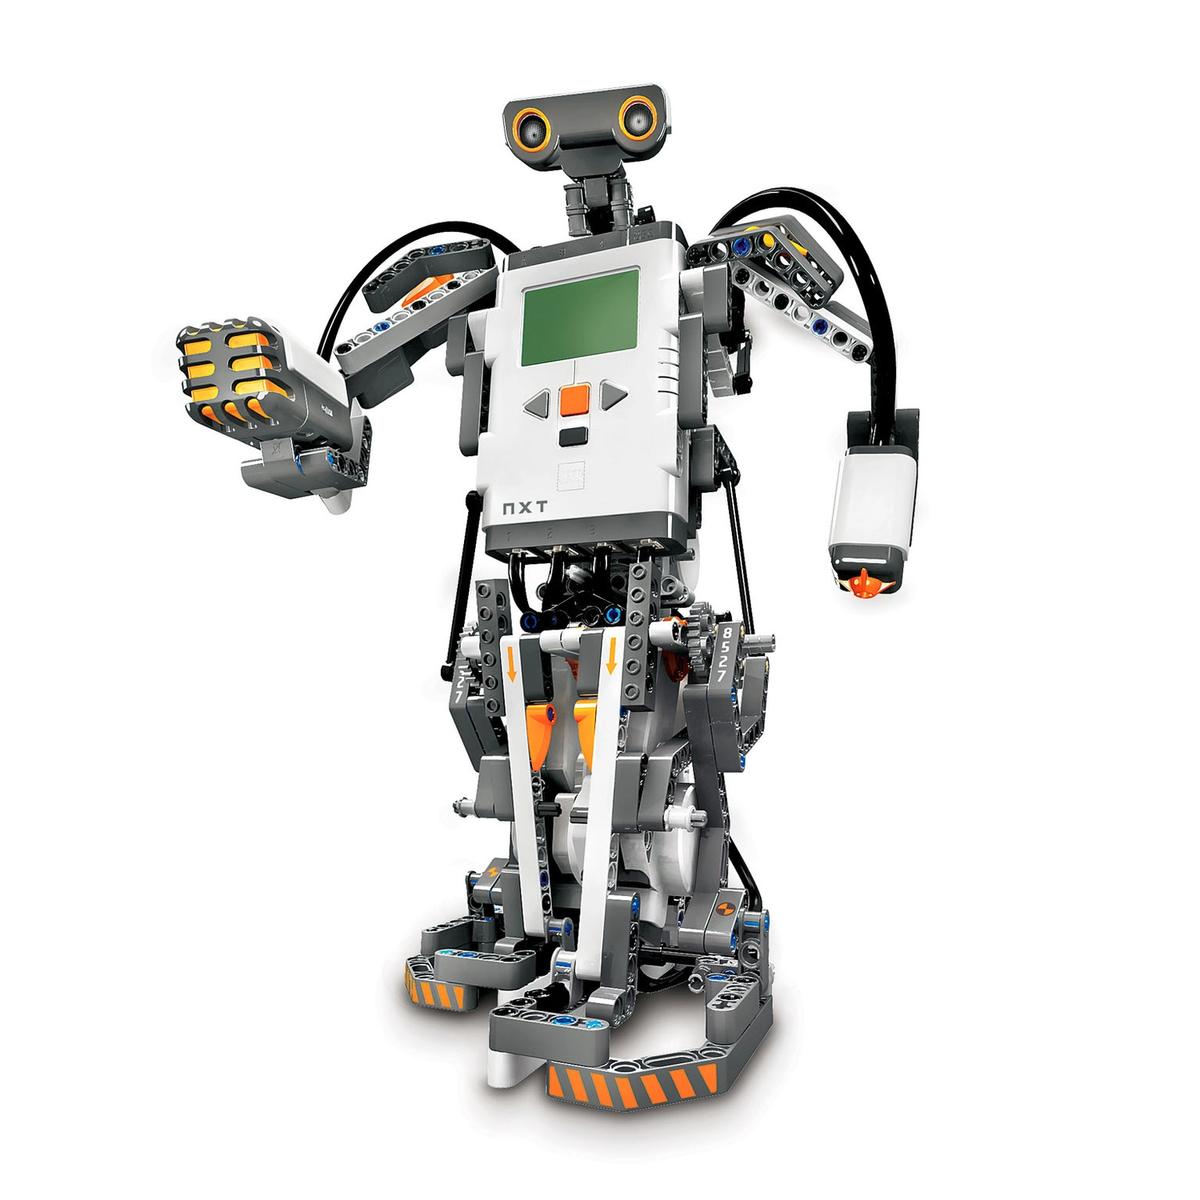 mest vandfald Desværre Lego Mindstorms NXT - ROBOTS: Your Guide to the World of Robotics